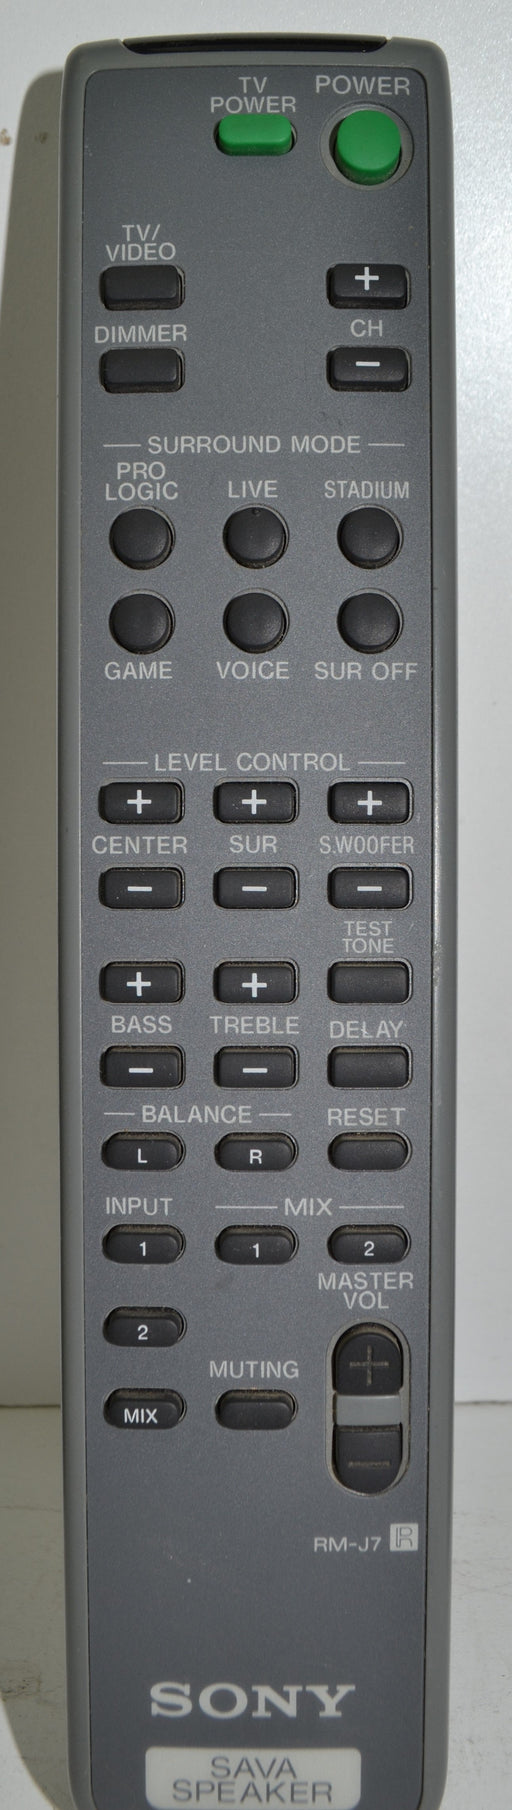 Sony RM-J7 Sava Speaker Remote Control-Remote-SpenCertified-refurbished-vintage-electonics